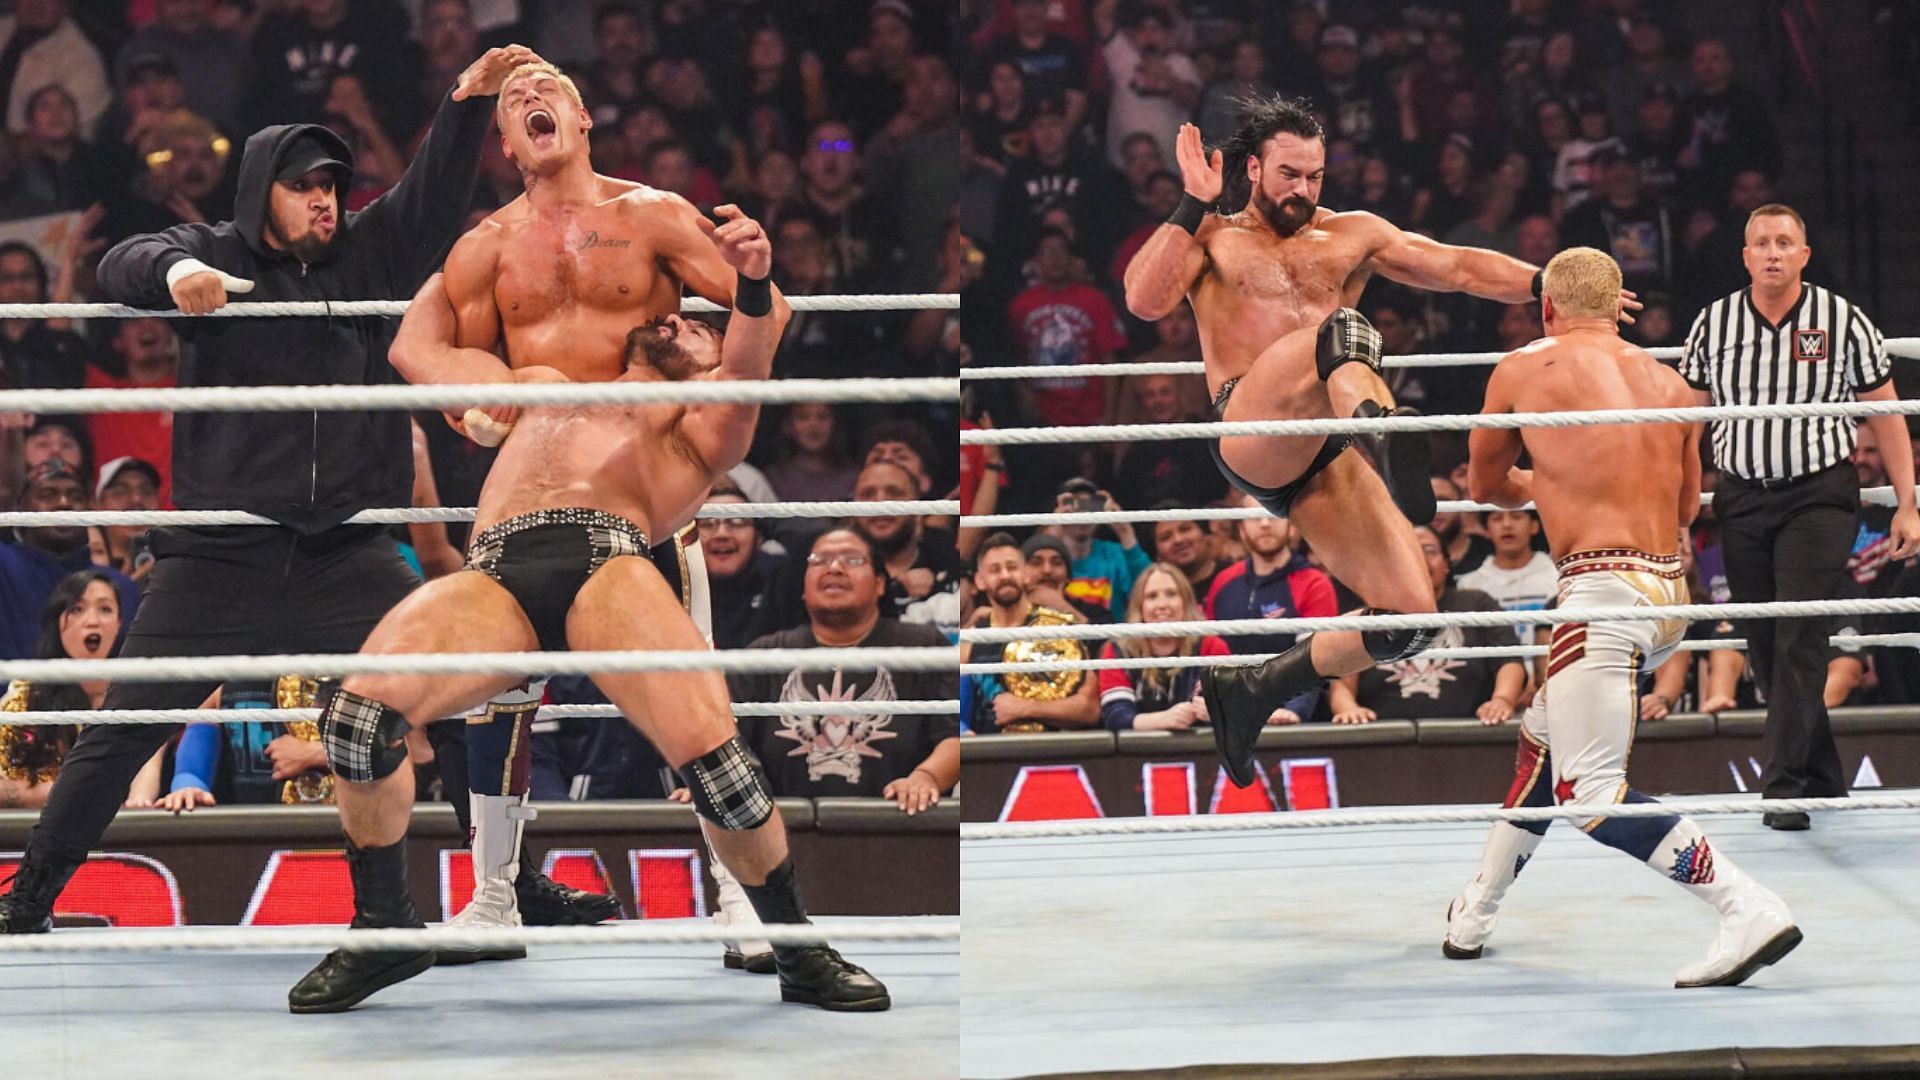 Solo Sikoa helps Drew McIntyre beat Cody Rhodes